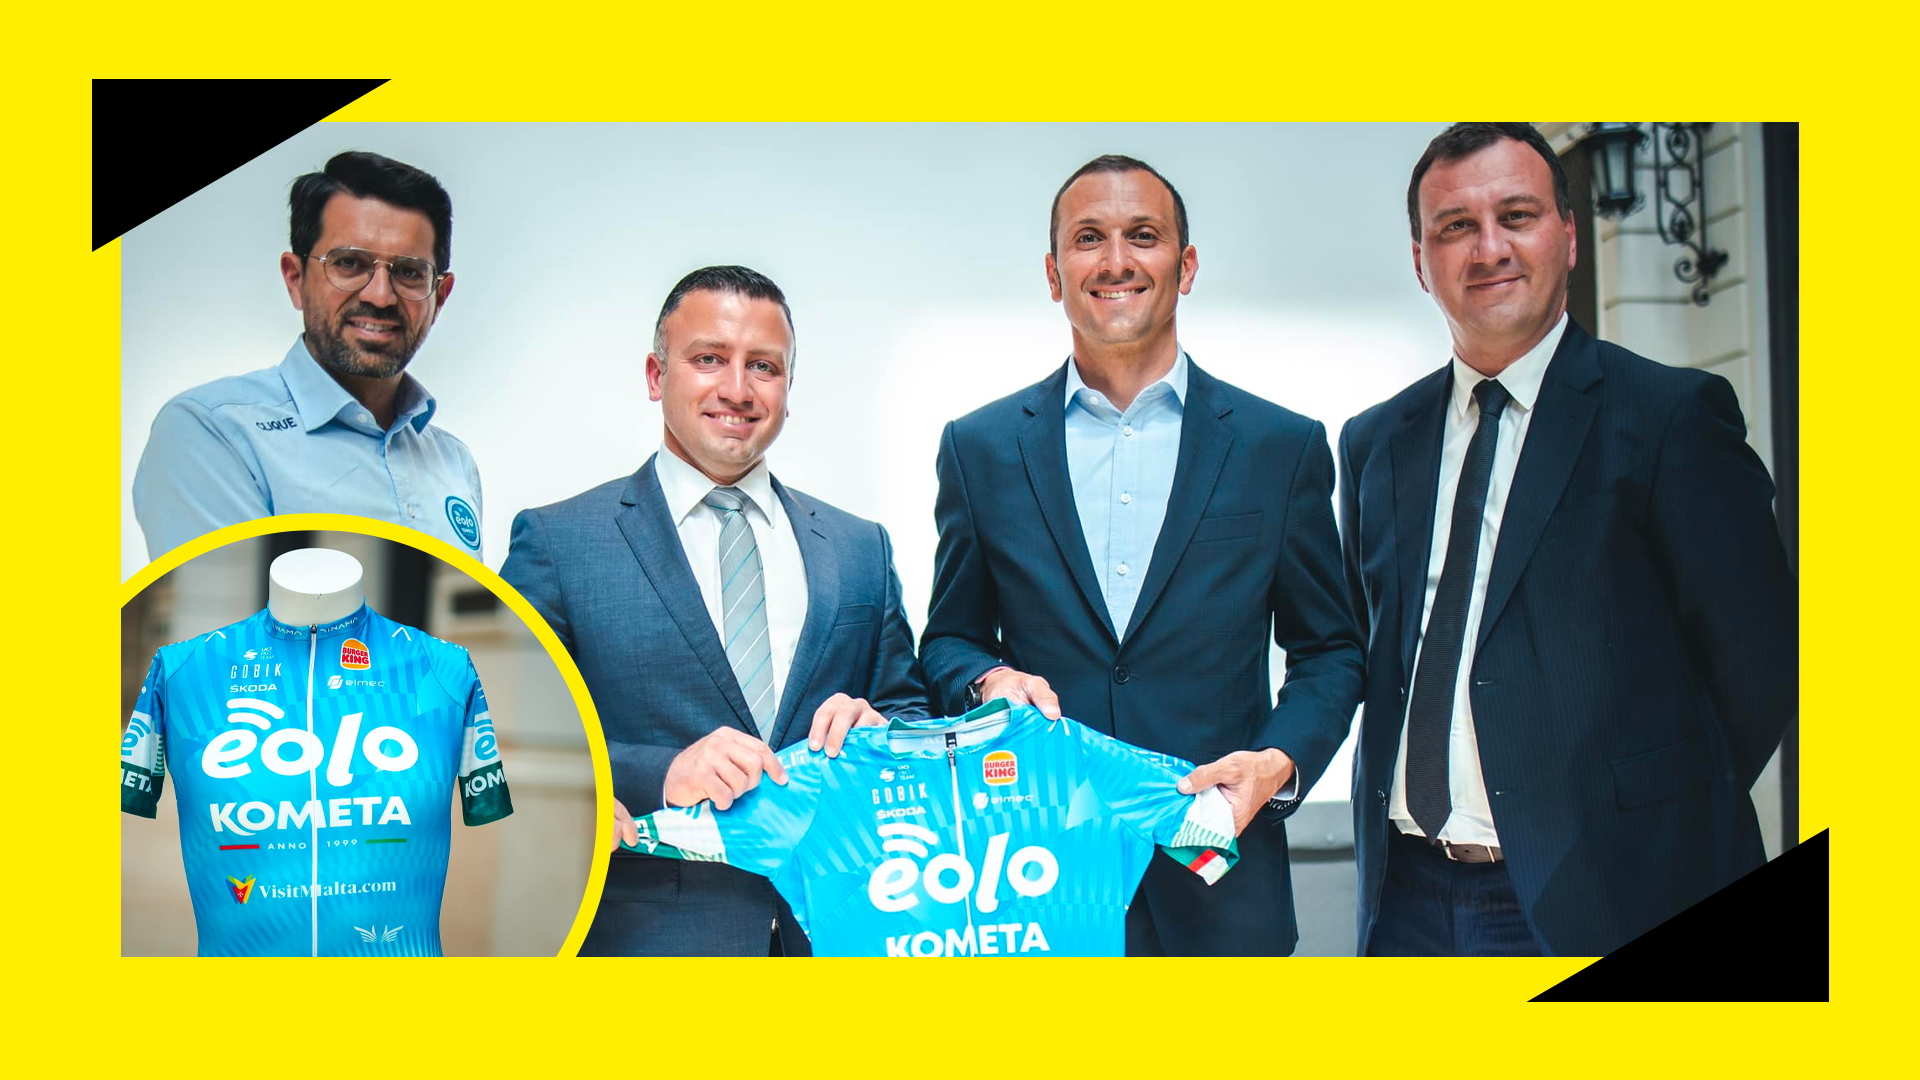 VisitMalta becomes the official destination partner of EOLO-Kometa Cycling Team